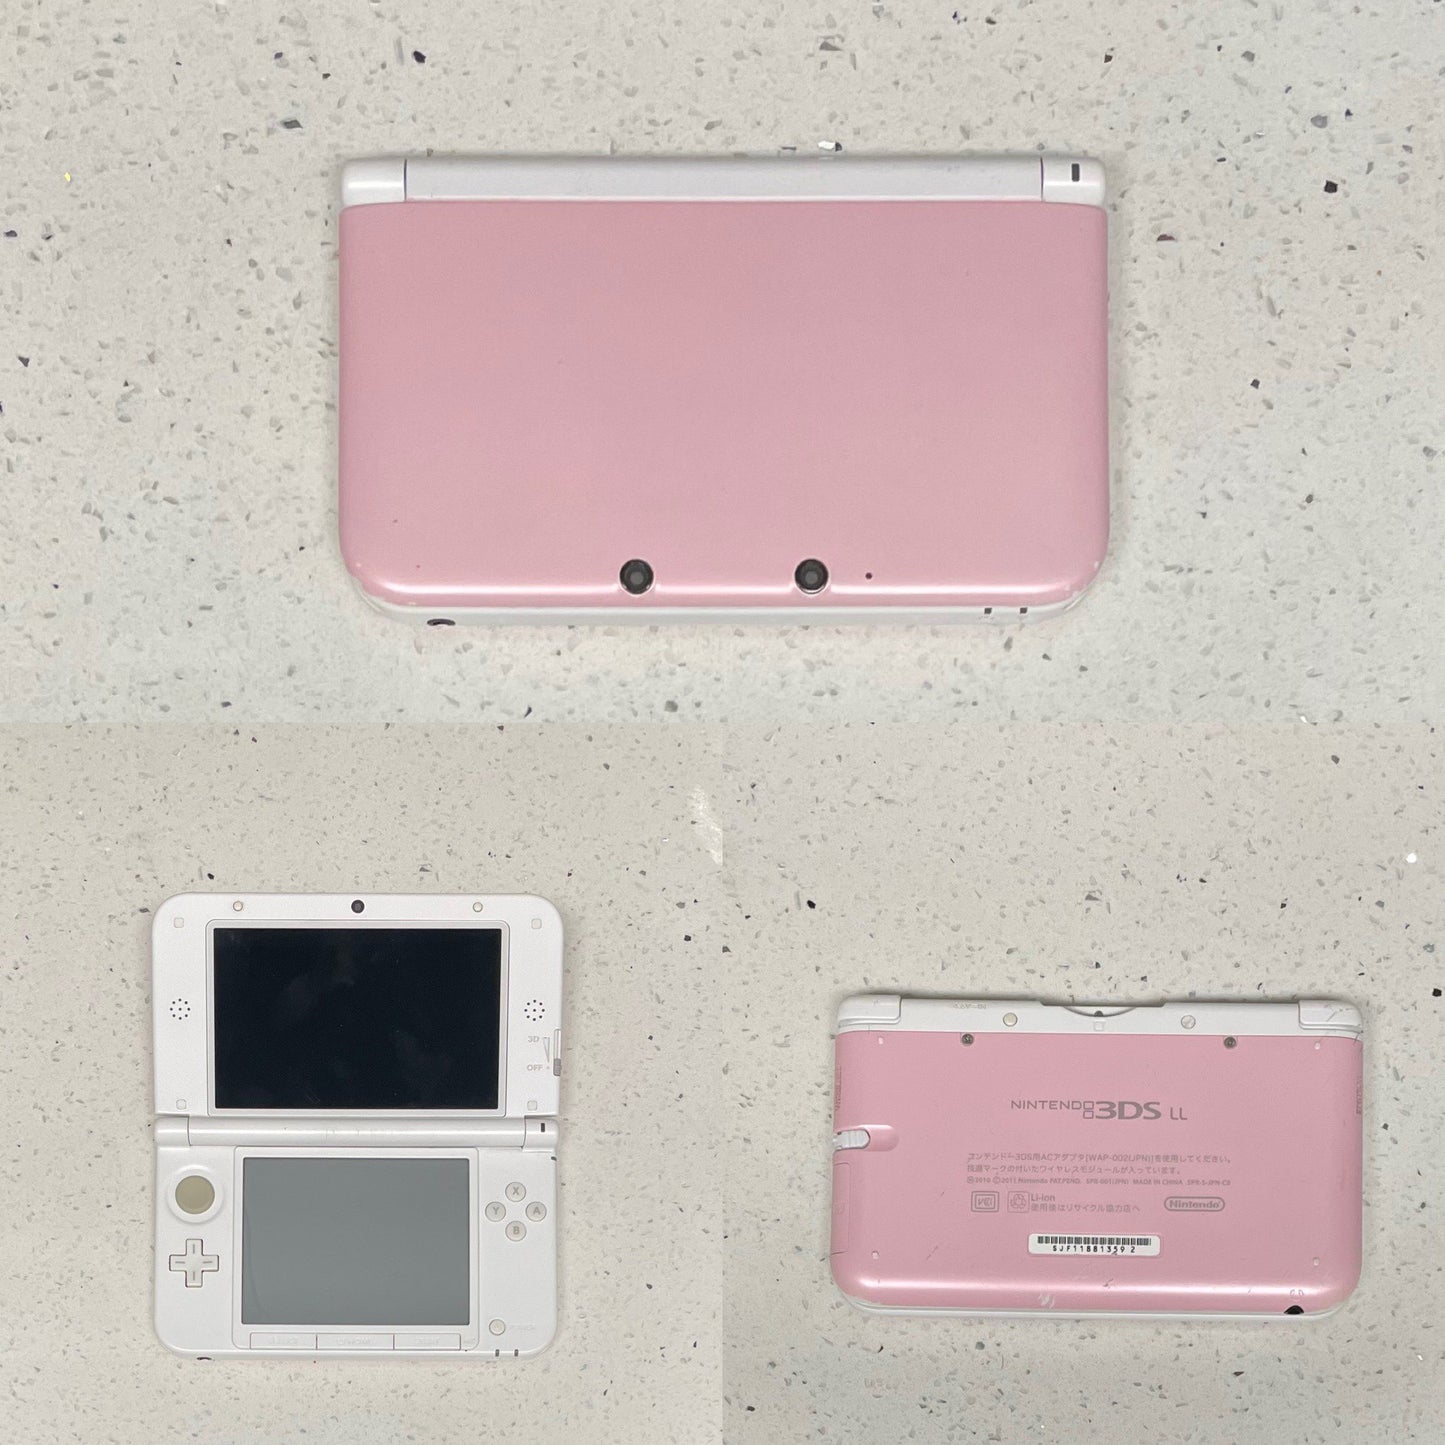 Nintendo 3DS XL Console (Refurbished)